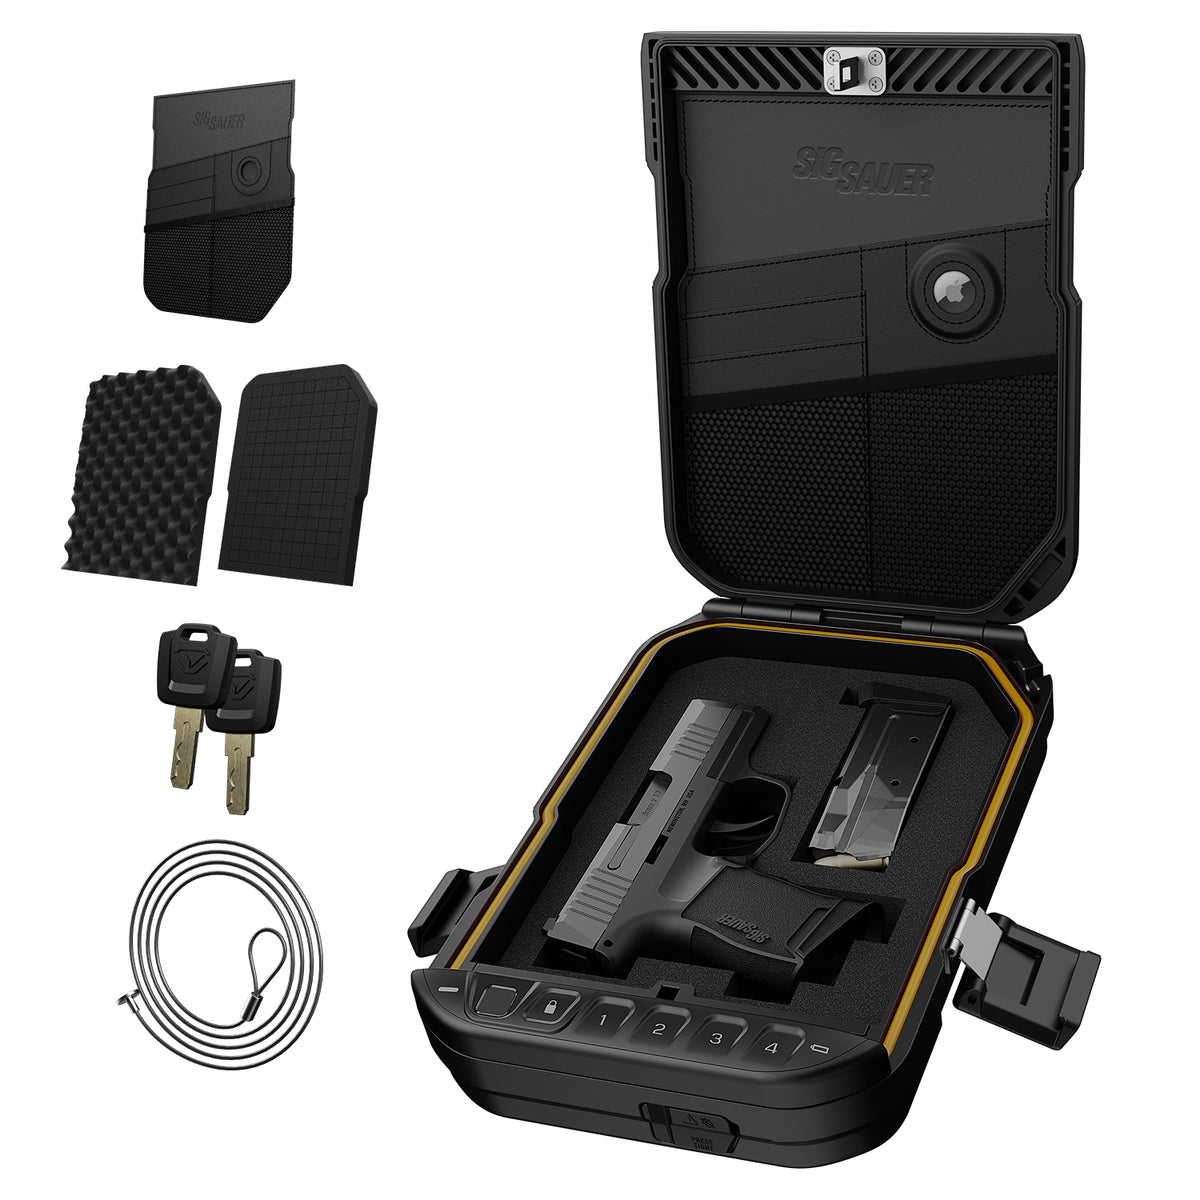 Vaultek Sig Sauer LifePod Biometric Rugged Weather Resistant Lockbox with Accessories